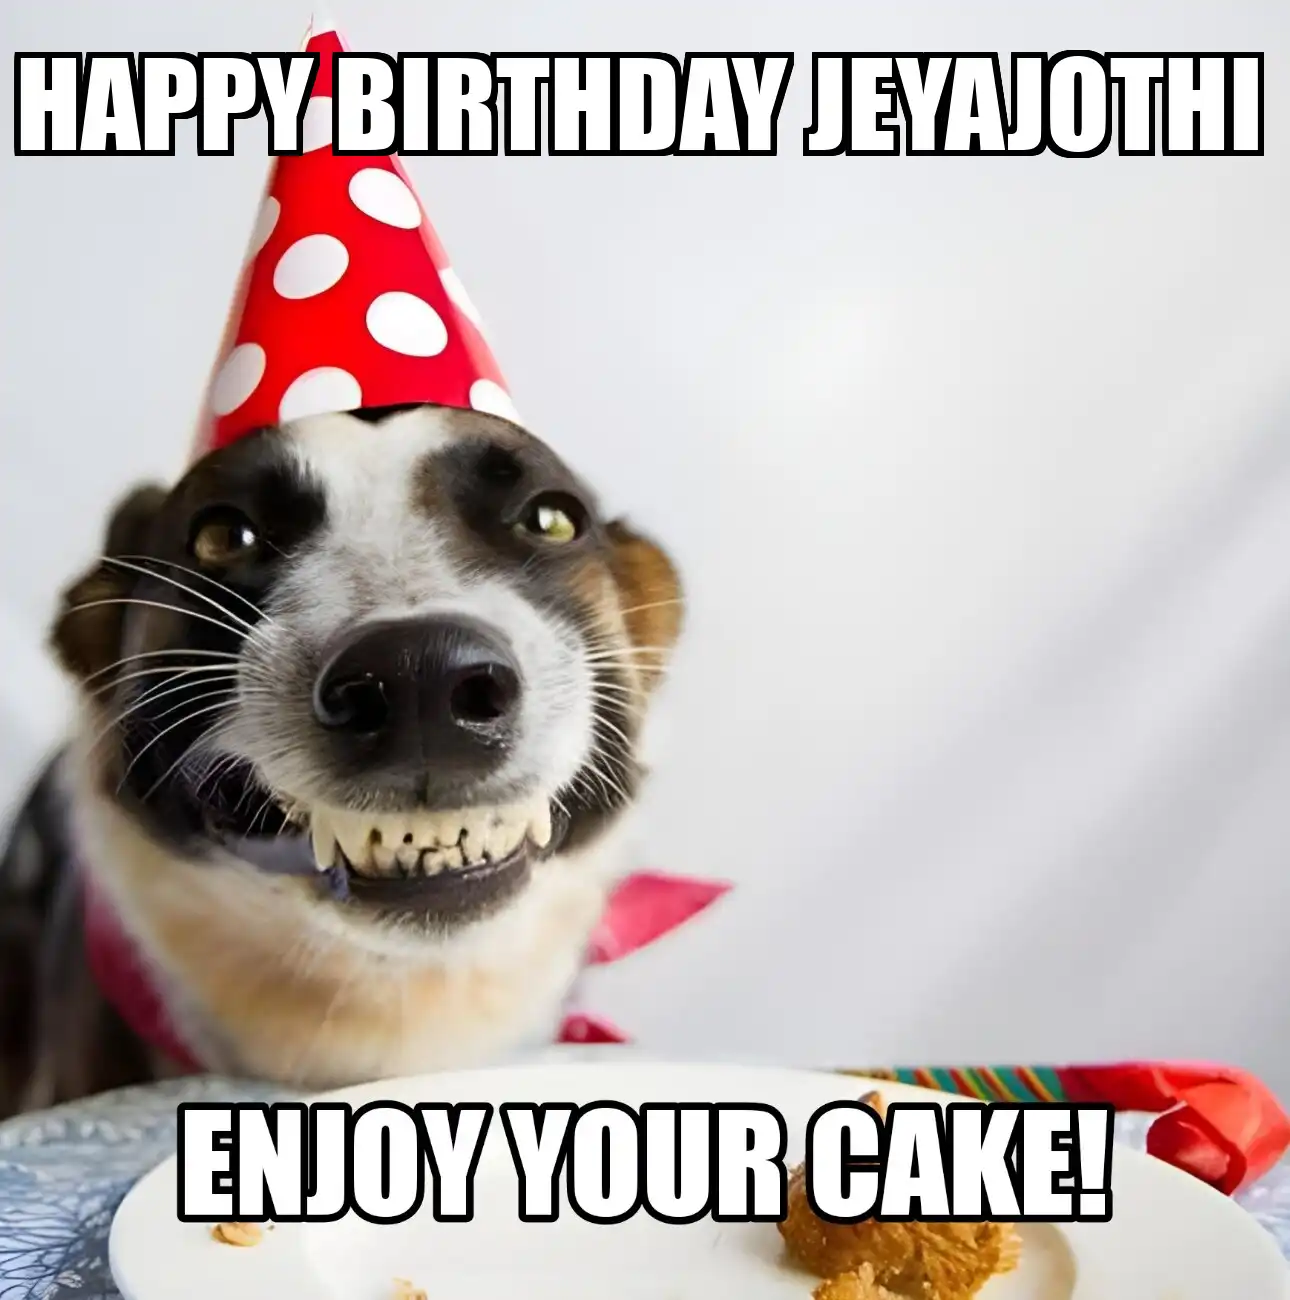 Happy Birthday Jeyajothi Enjoy Your Cake Dog Meme